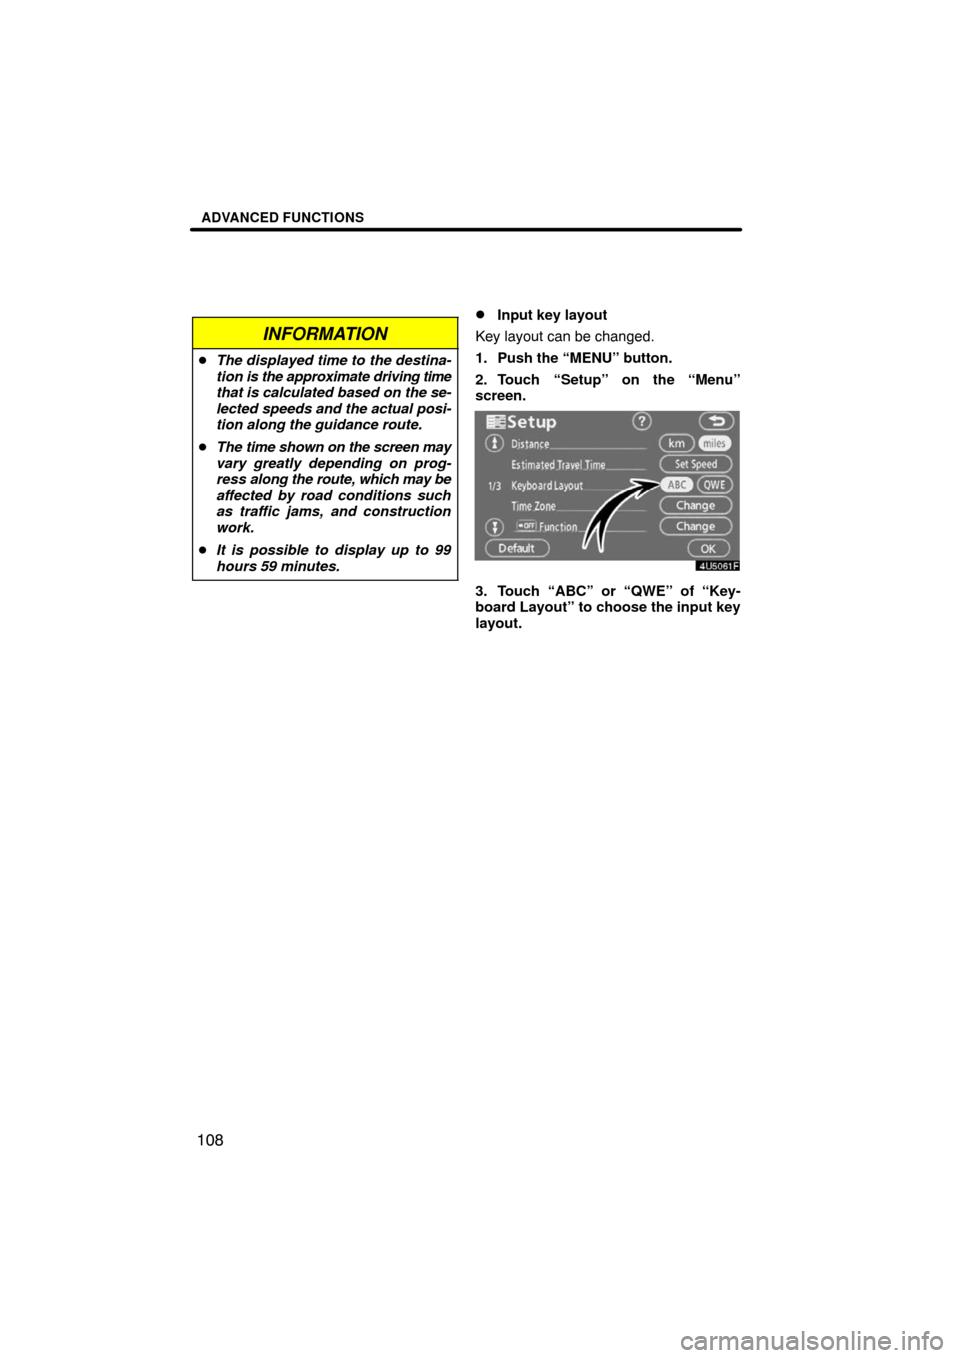 TOYOTA CAMRY 2008 XV40 / 8.G Navigation Manual ADVANCED FUNCTIONS
108
INFORMATION
The displayed time to the destina-
tion is the approximate driving time
that is calculated based on the se-
lected speeds and the actual posi-
tion along the guidan